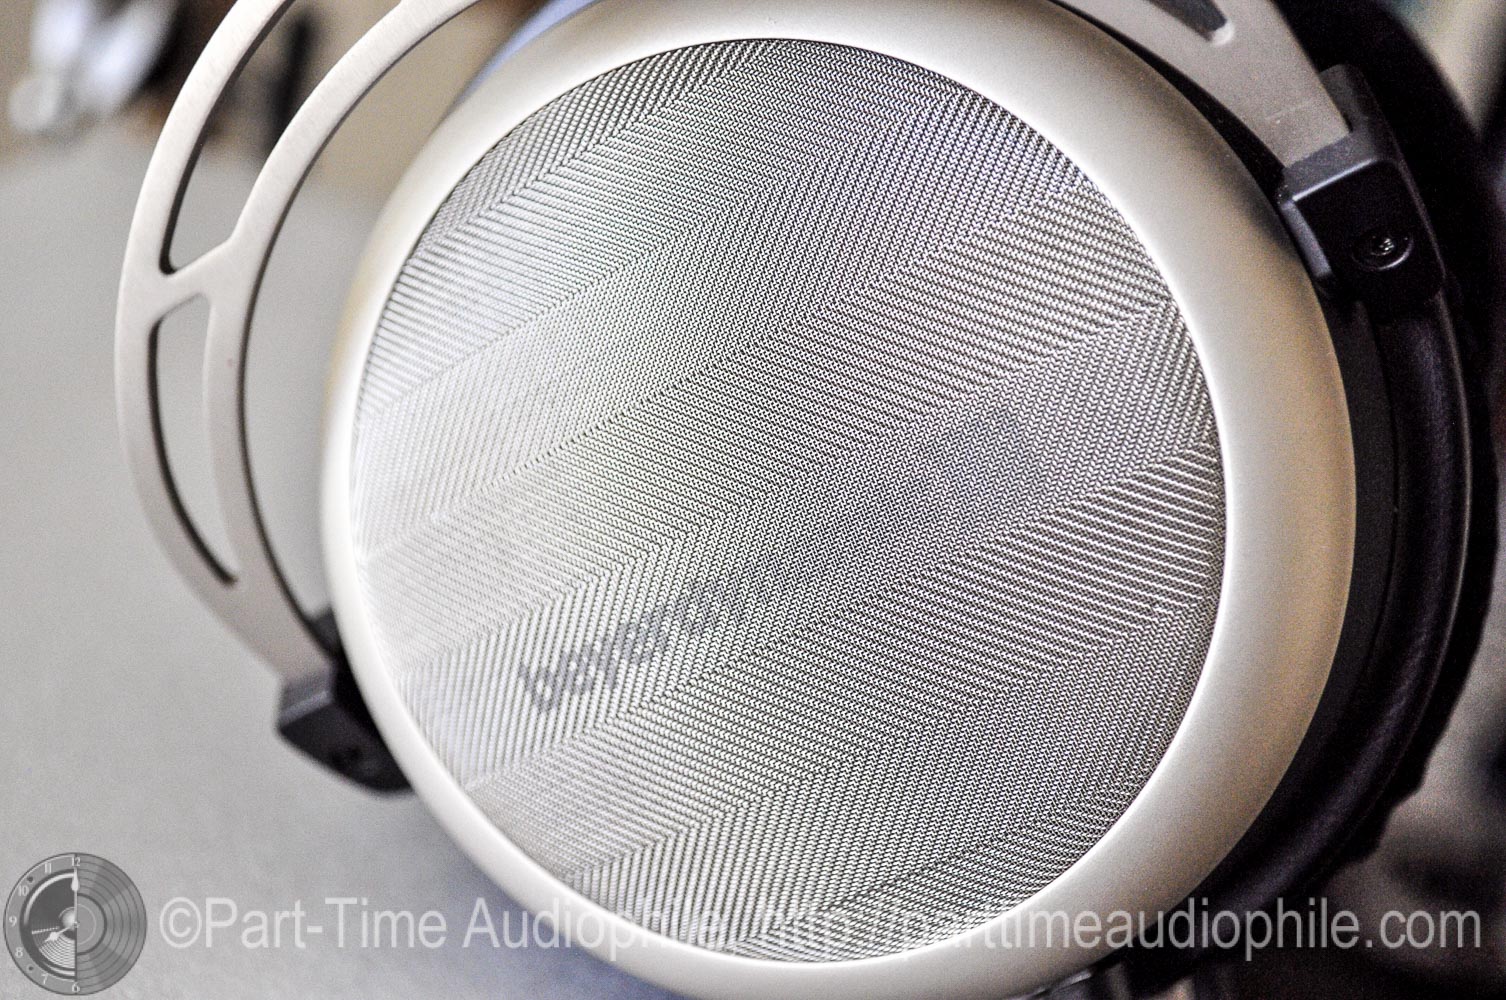 Review: Beyerdynamic T-1 Headphone - Part-Time Audiophile